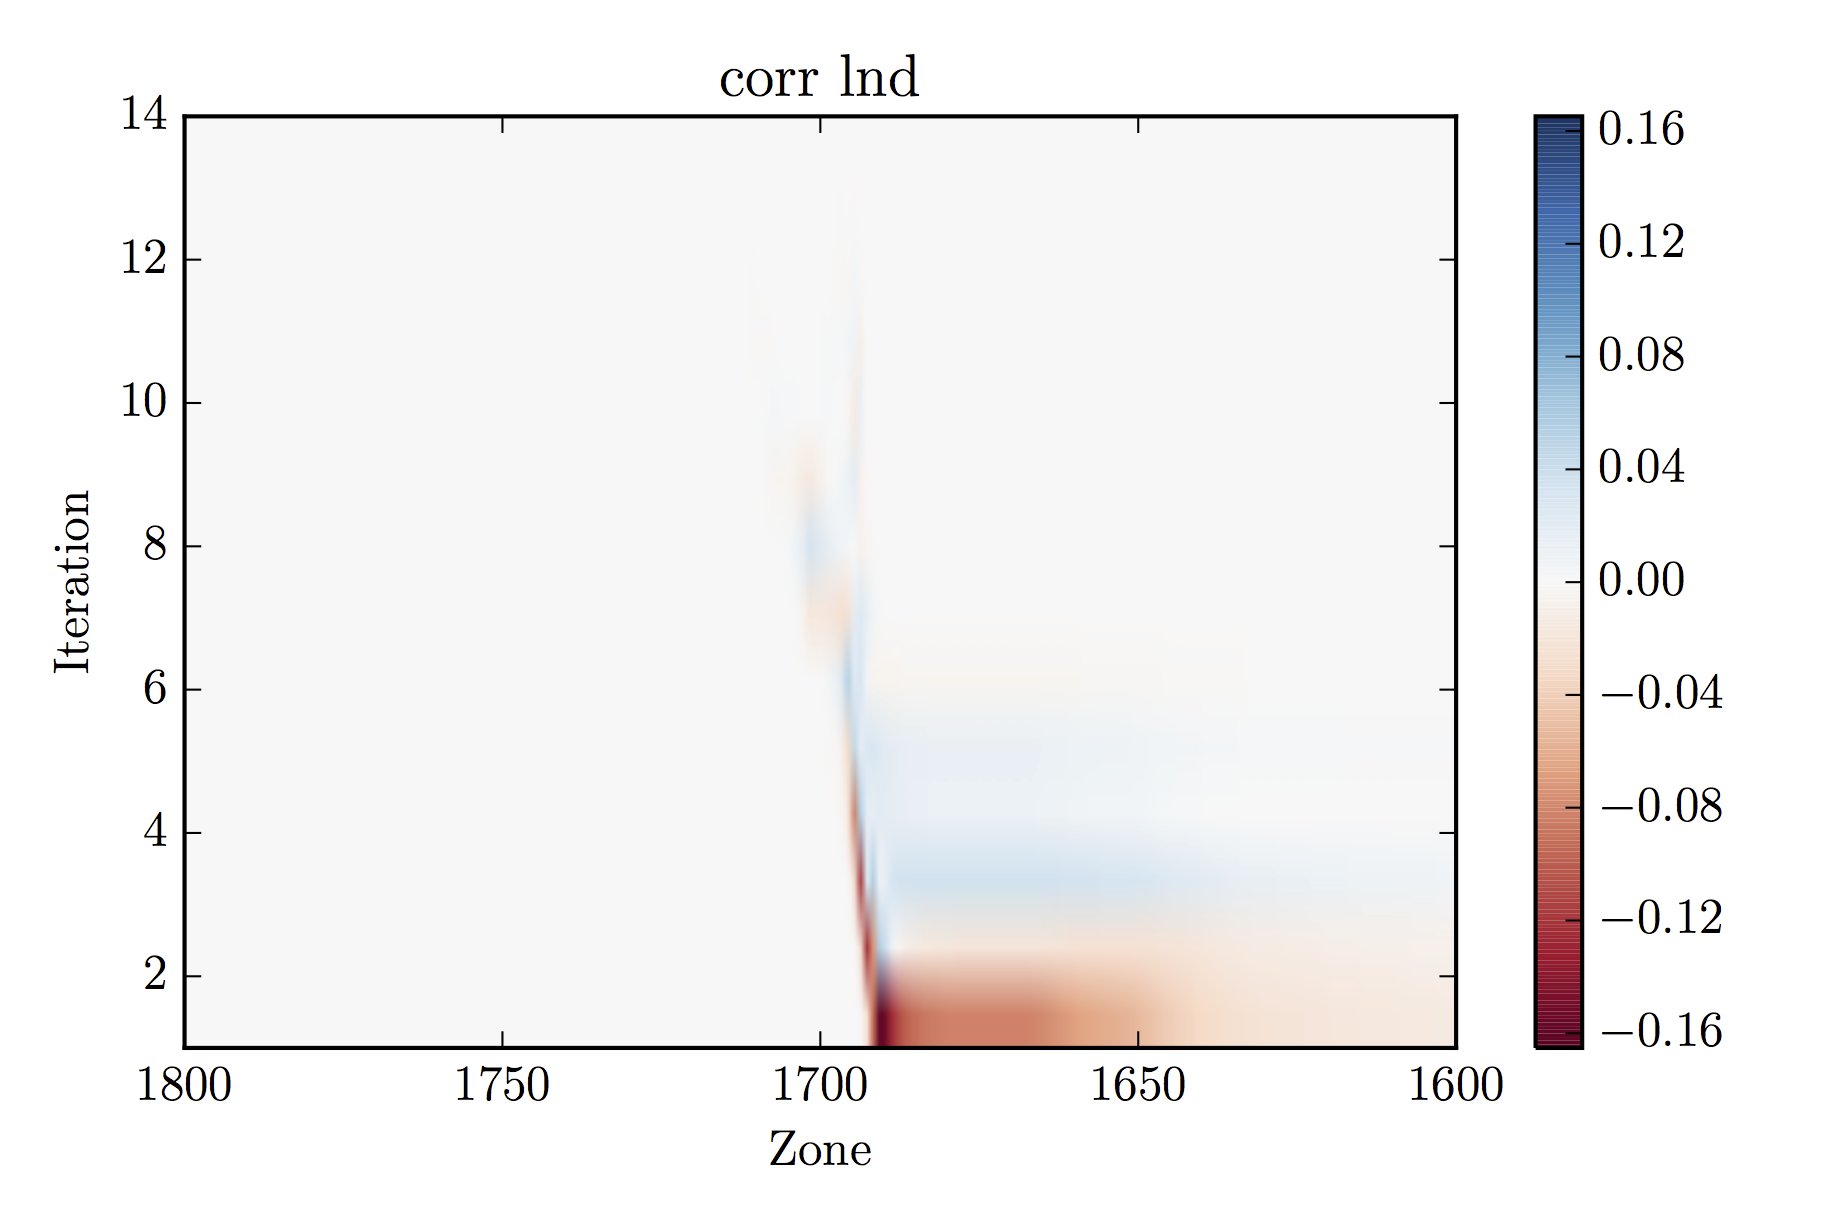 Zoomed plot of log density corrections.